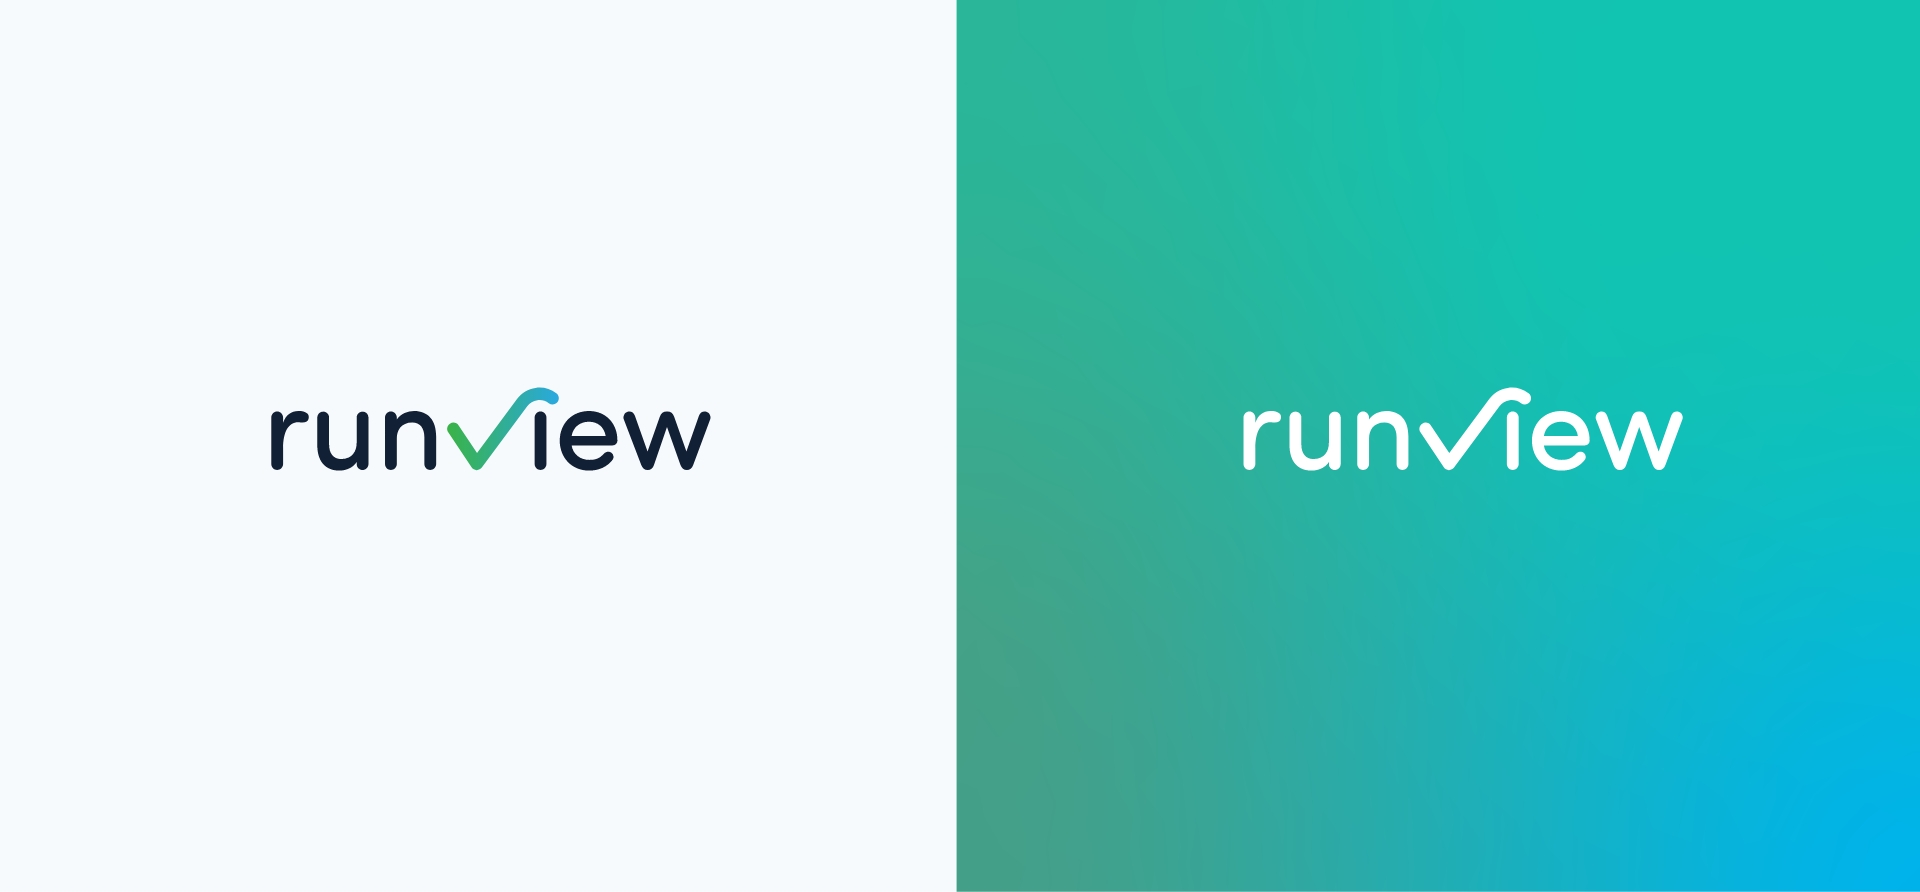 runview abbd sharing agency branding logo naming